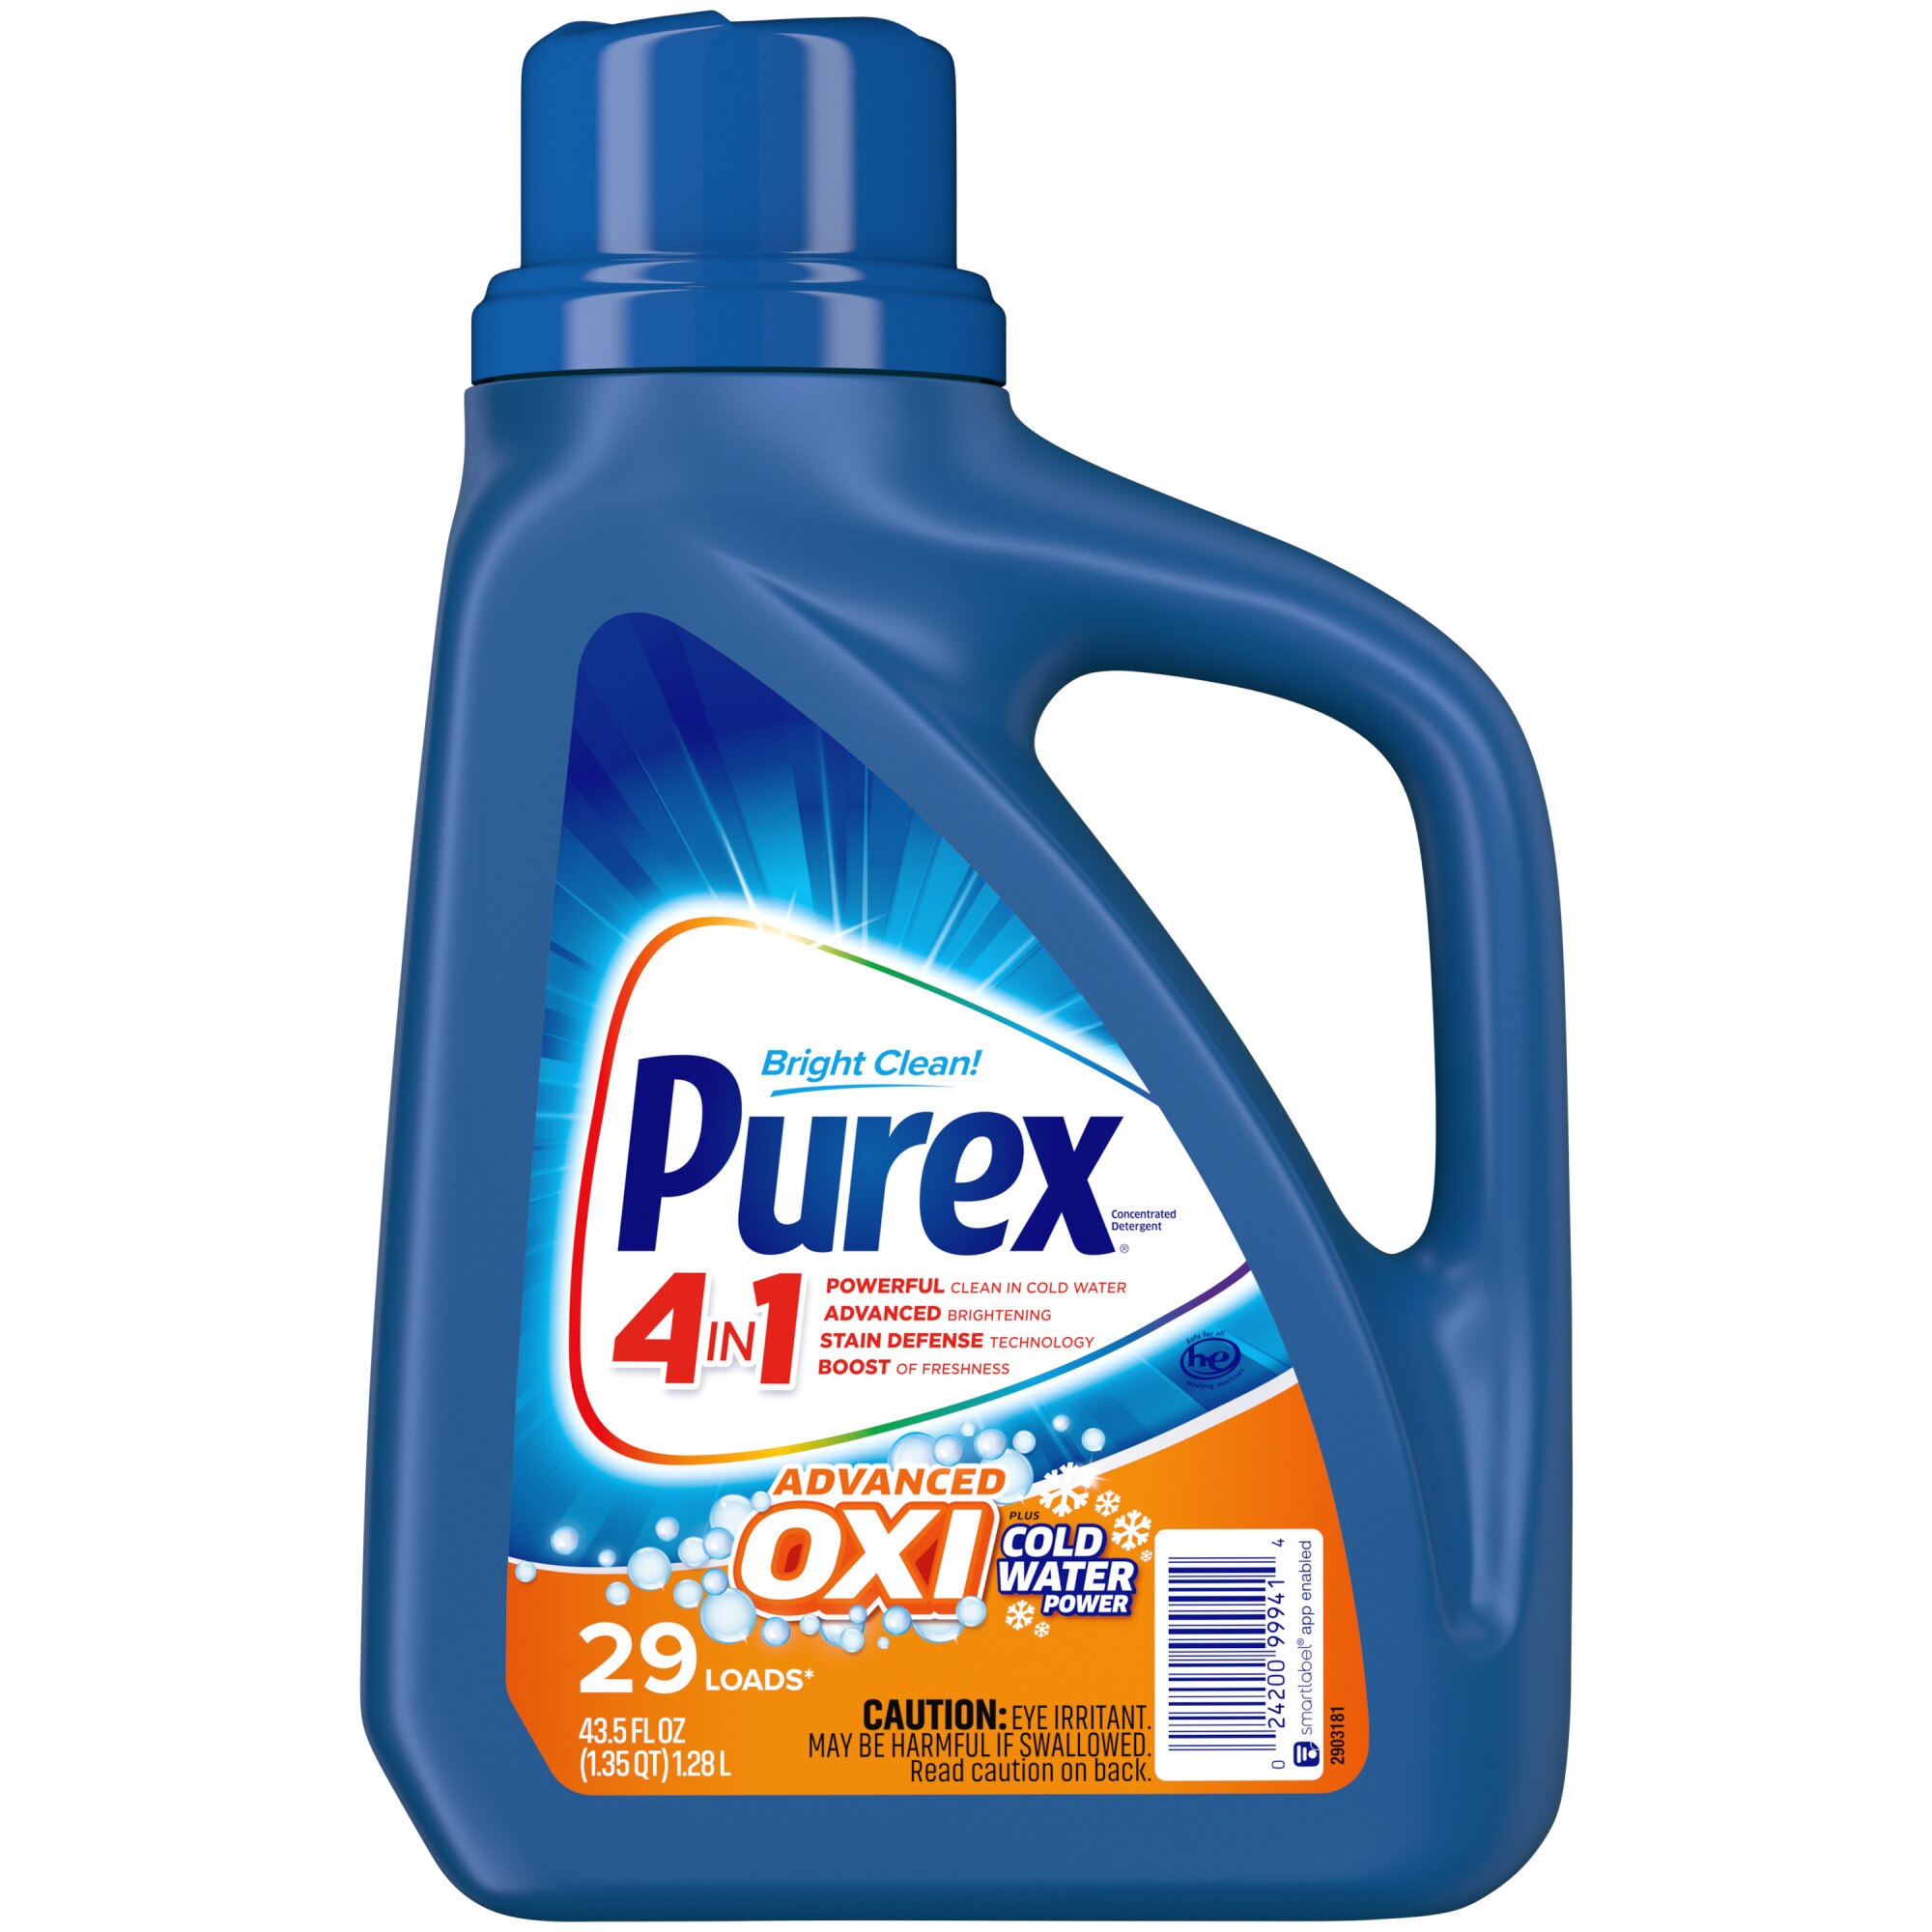 Purex Liquid Laundry Detergent Plus Oxi, Fresh Morning Burst, 43.5 Fluid OZ, 24 Loads